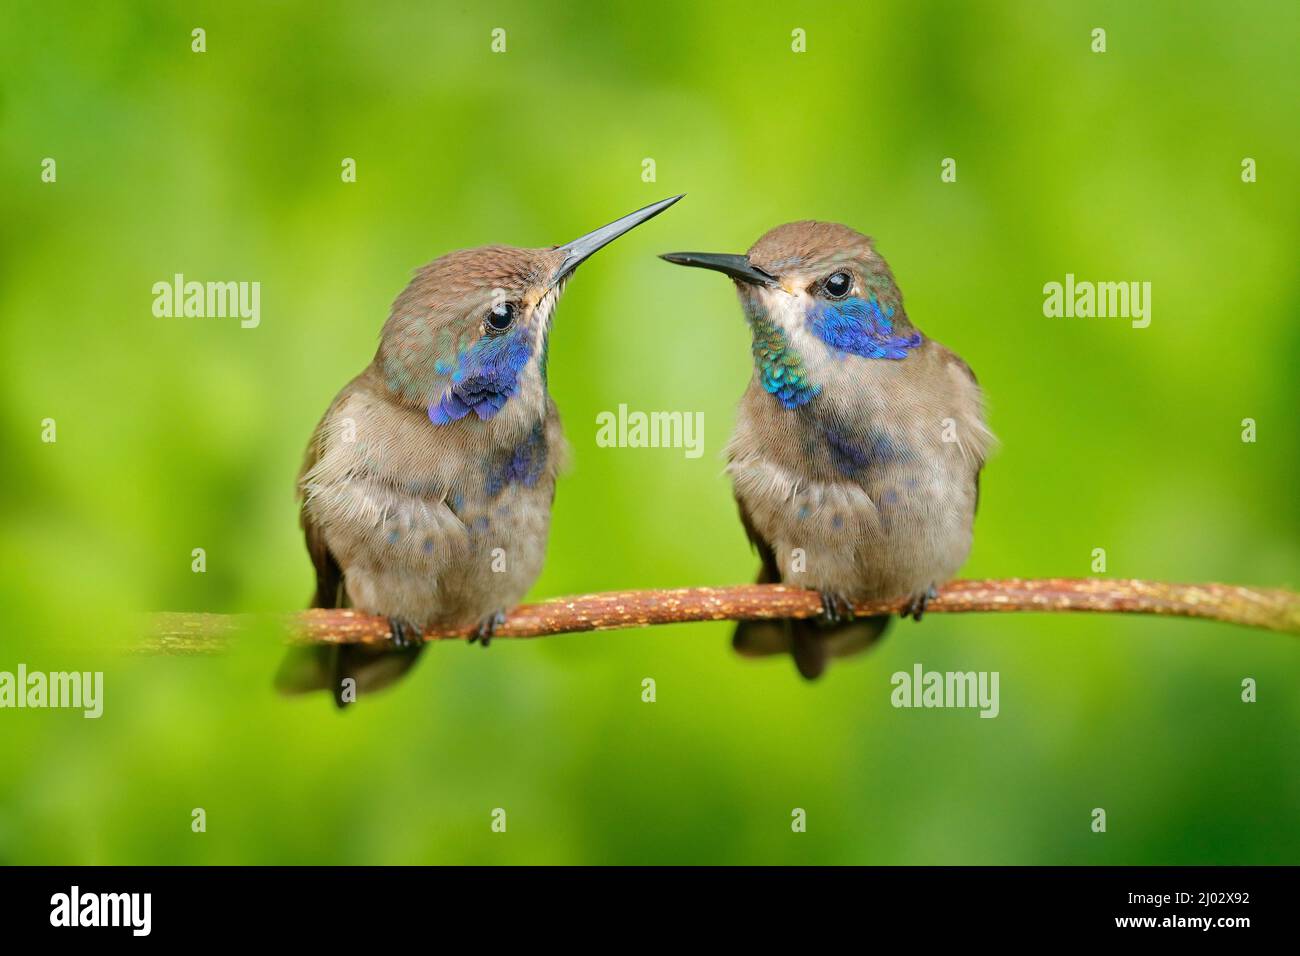 Tropic wildlife, two cute tinny birds. Bird with blue cheeks. Wildlife scene from Ecuador. Bird in nature. Hummingbirds Brown Violet-ear, sitting on t Stock Photo